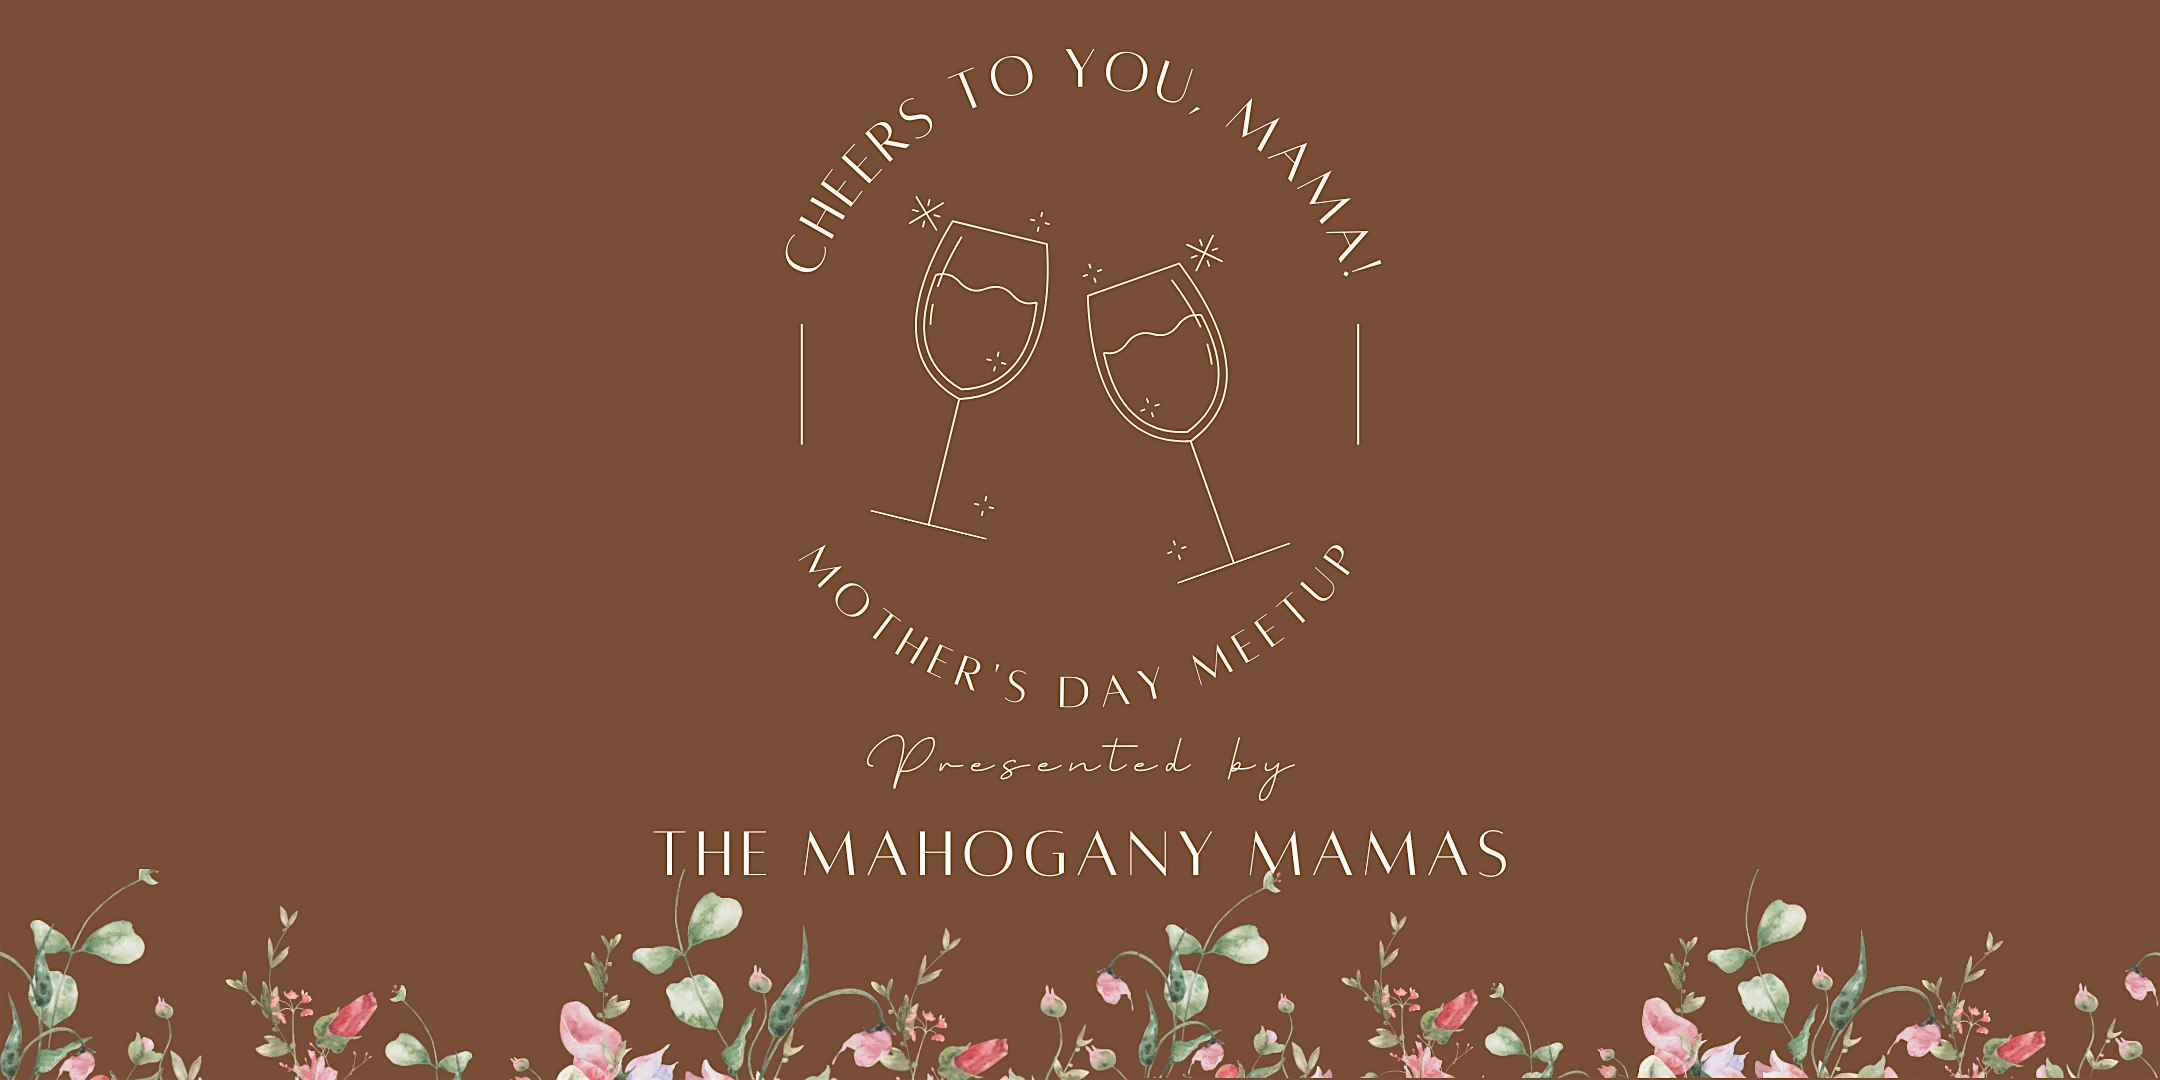 Mahogany Mamas' Meet Up